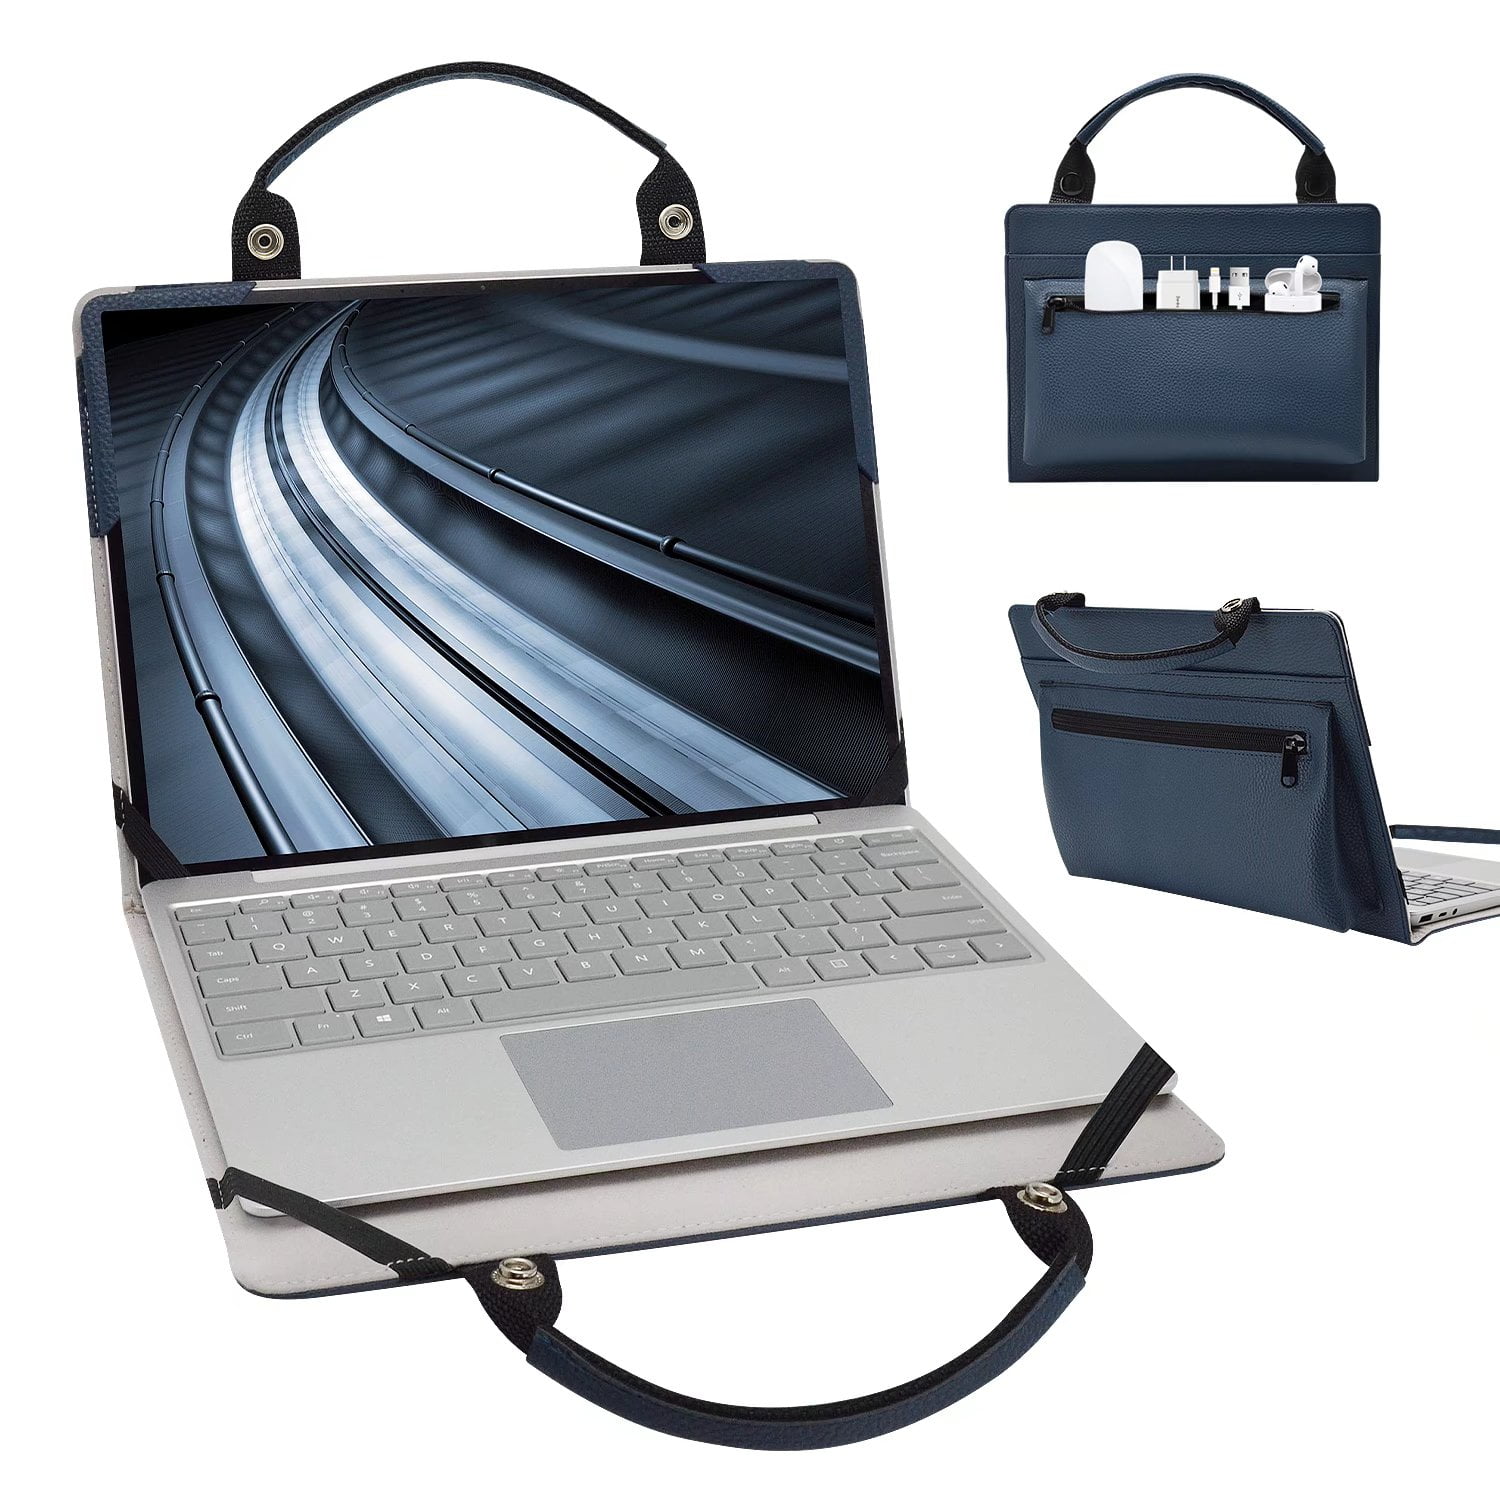 Warm Wolves Family Waterproof and Dustproof Laptop Bags Ultrabook Briefcase Sleeve Case Bags 